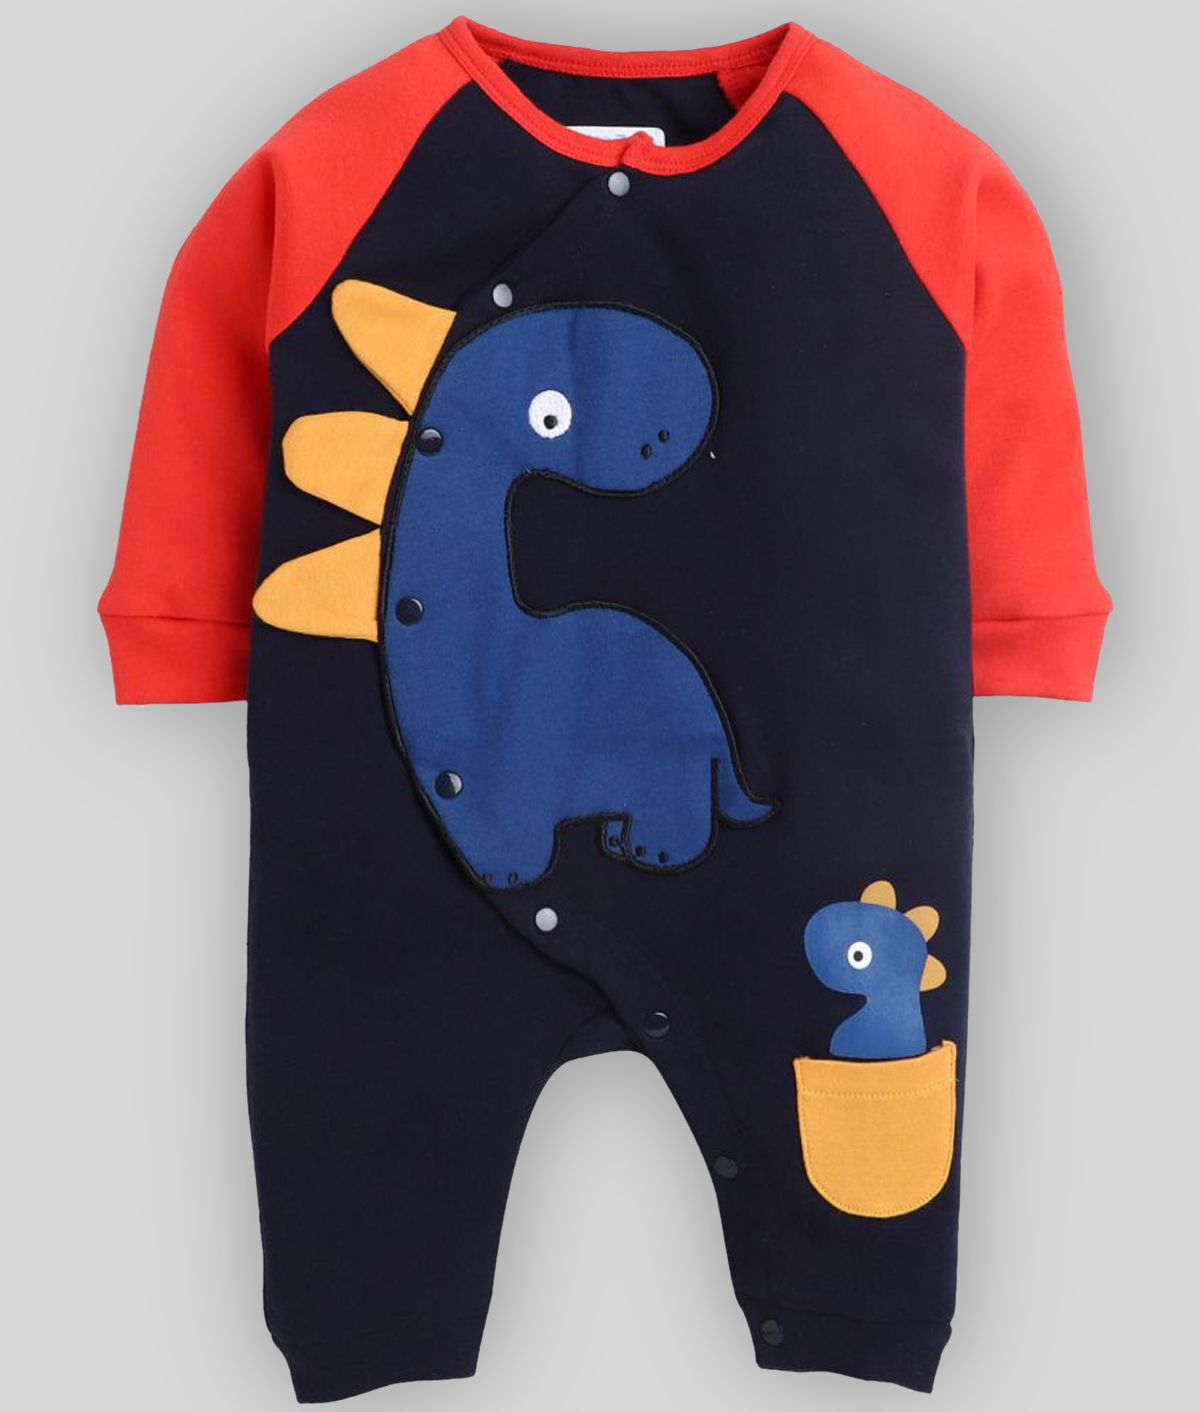     			BUMZEE Navy Blue Full Sleeves Boys Dino Print Sleepsuit Age - 0-3 Months